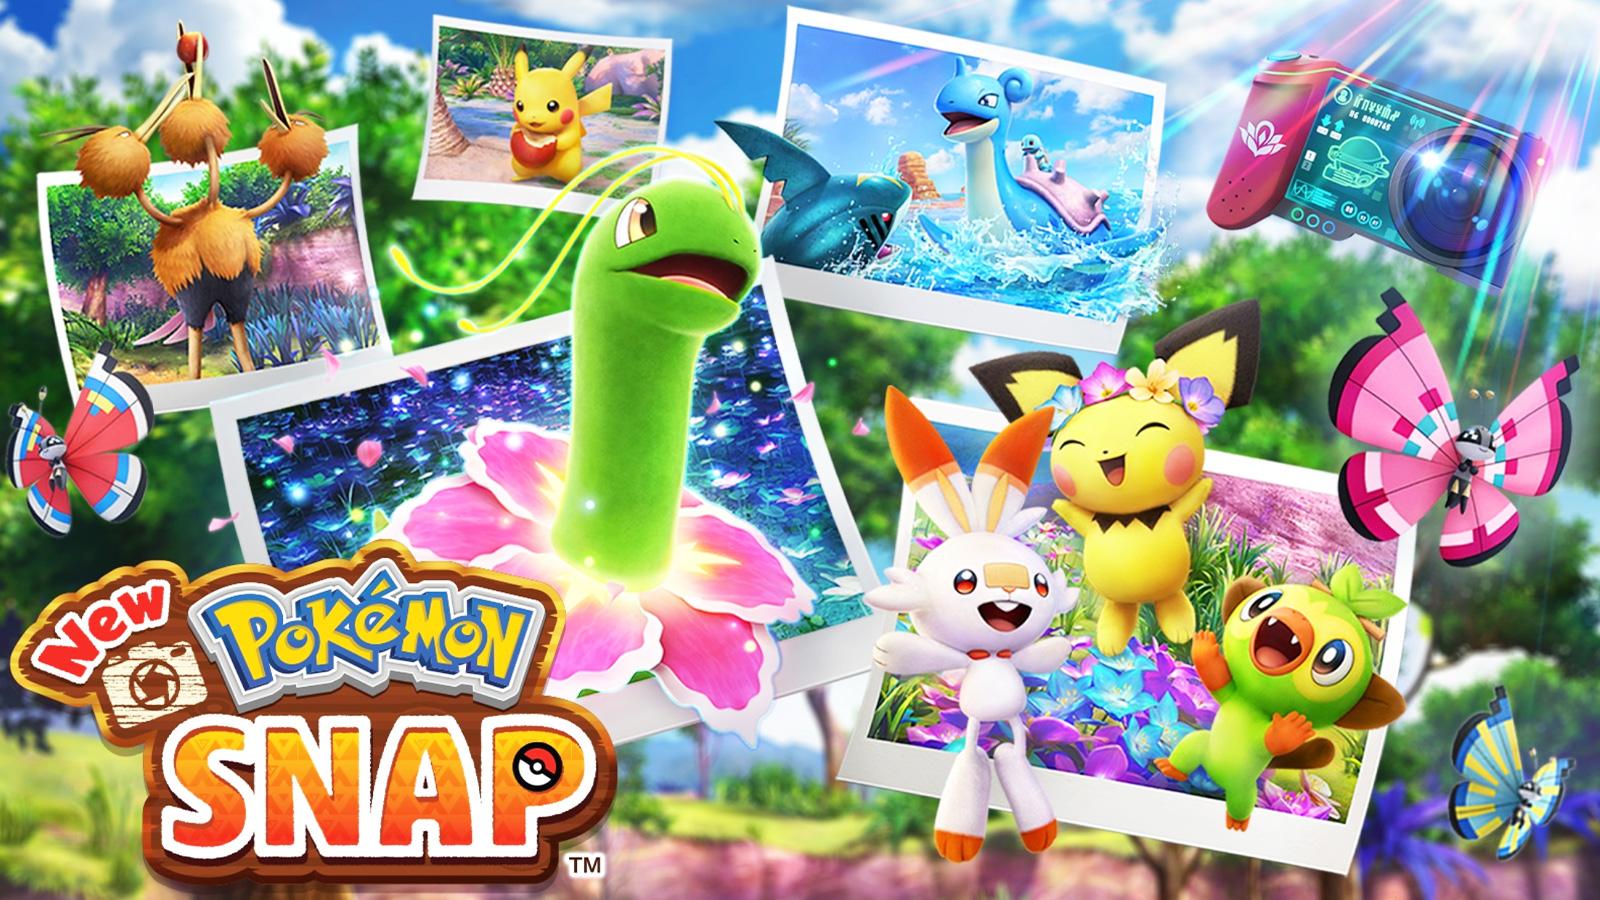 Screenshot of New Pokemon snap promotional.